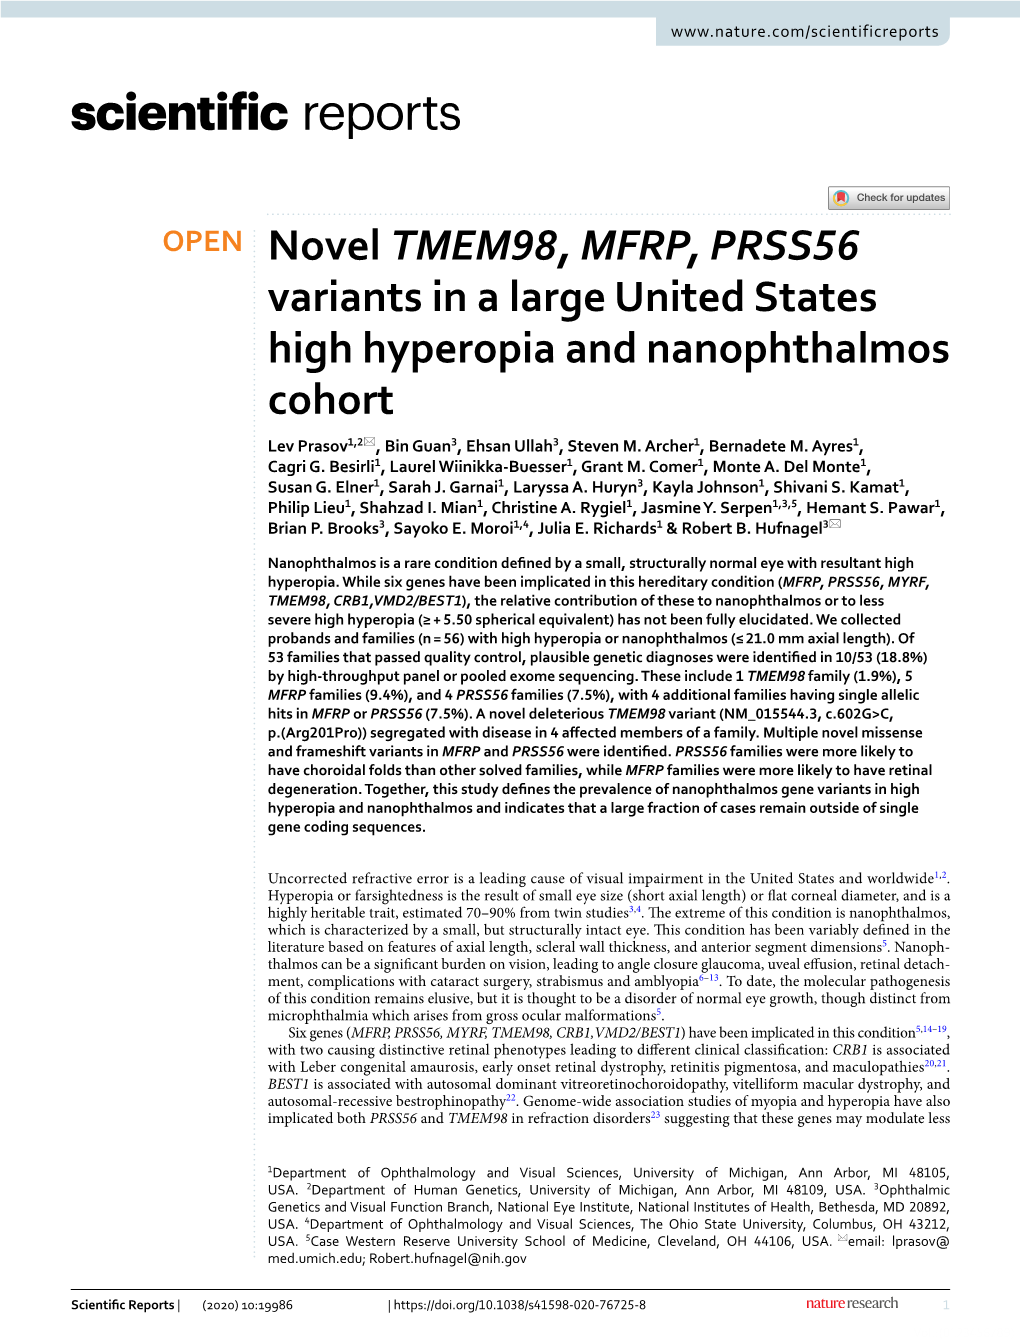 Novel TMEM98, MFRP, PRSS56 Variants in a Large United States High Hyperopia and Nanophthalmos Cohort Lev Prasov1,2*, Bin Guan3, Ehsan Ullah3, Steven M